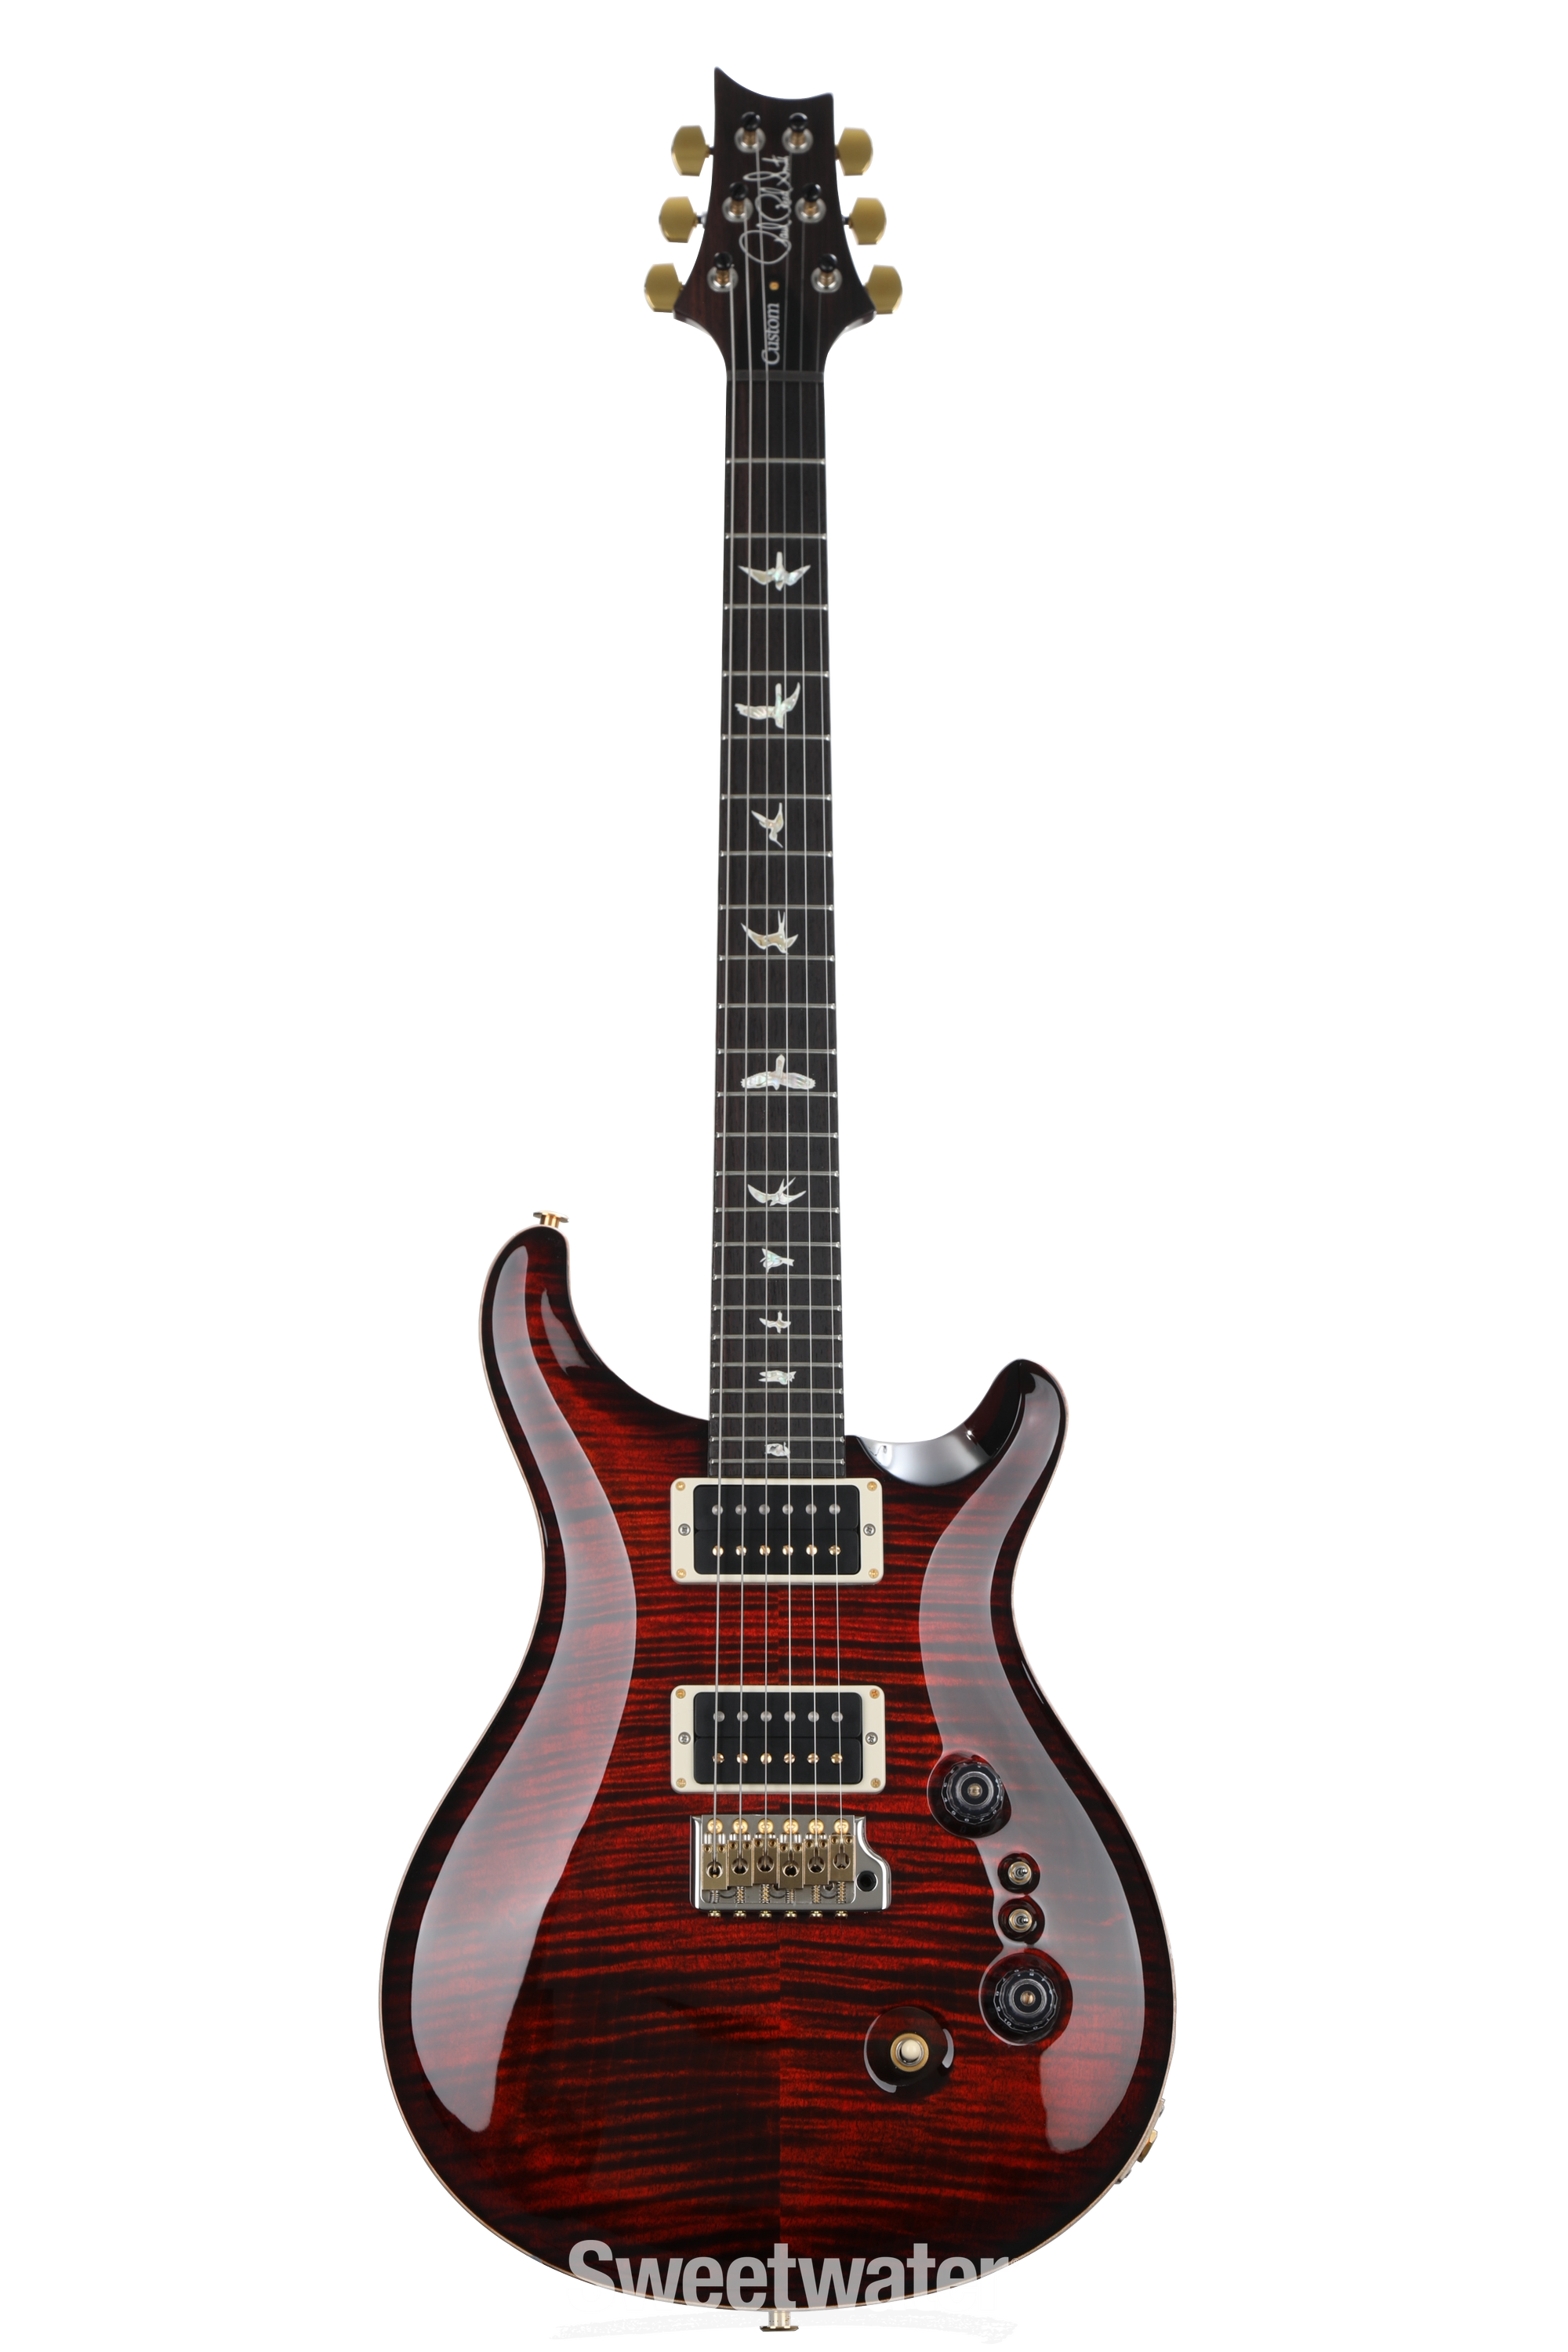 PRS Custom 24-08 Electric Guitar - Fire Red Burst 10-Top 